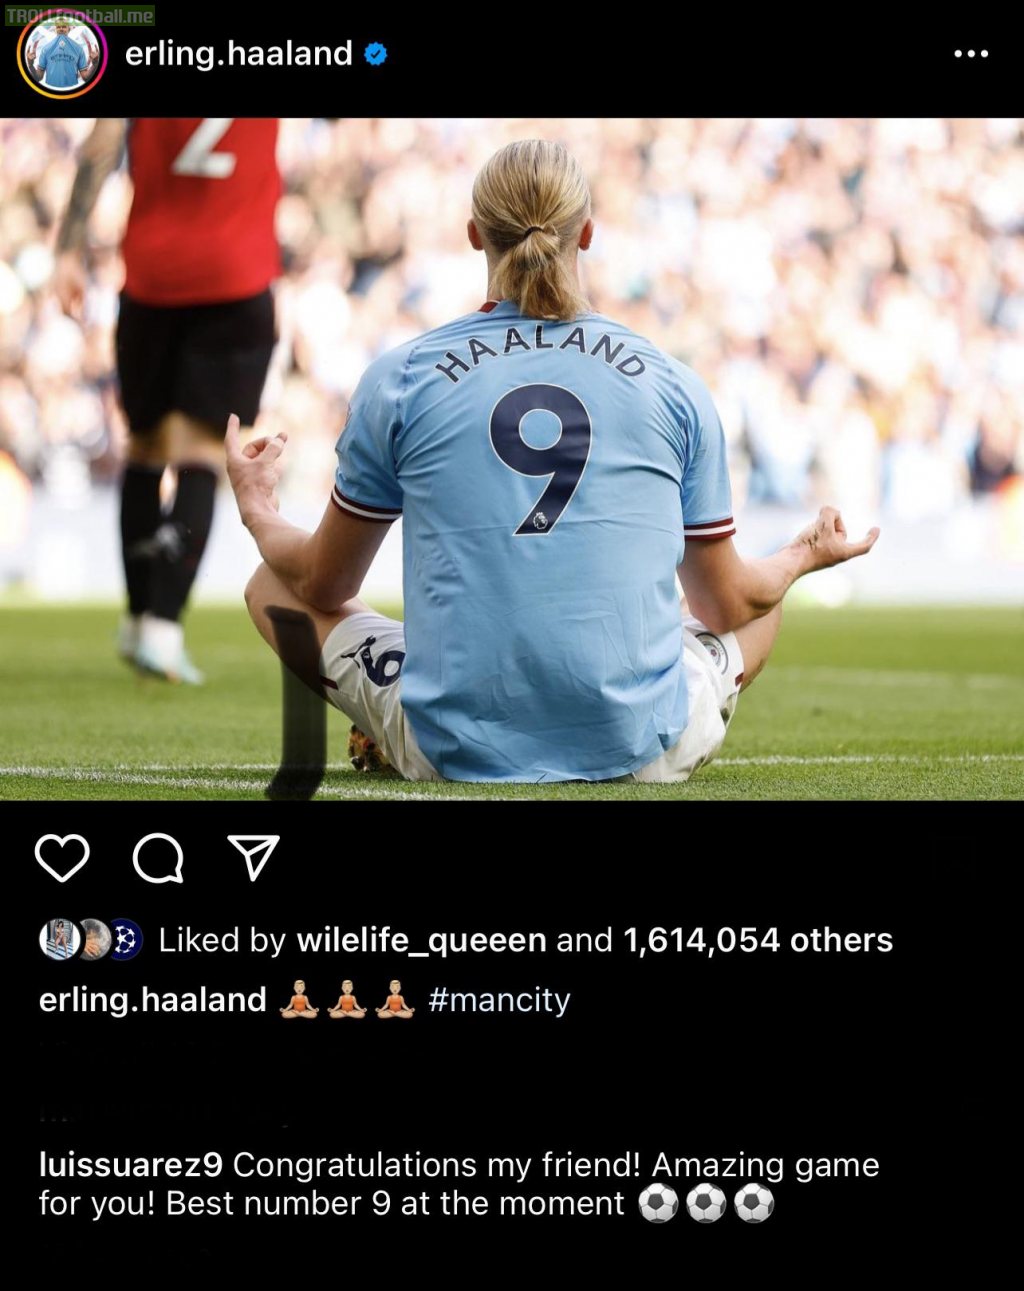 Luis Suarez calls Erling Haaland the best 9 right now on instagram